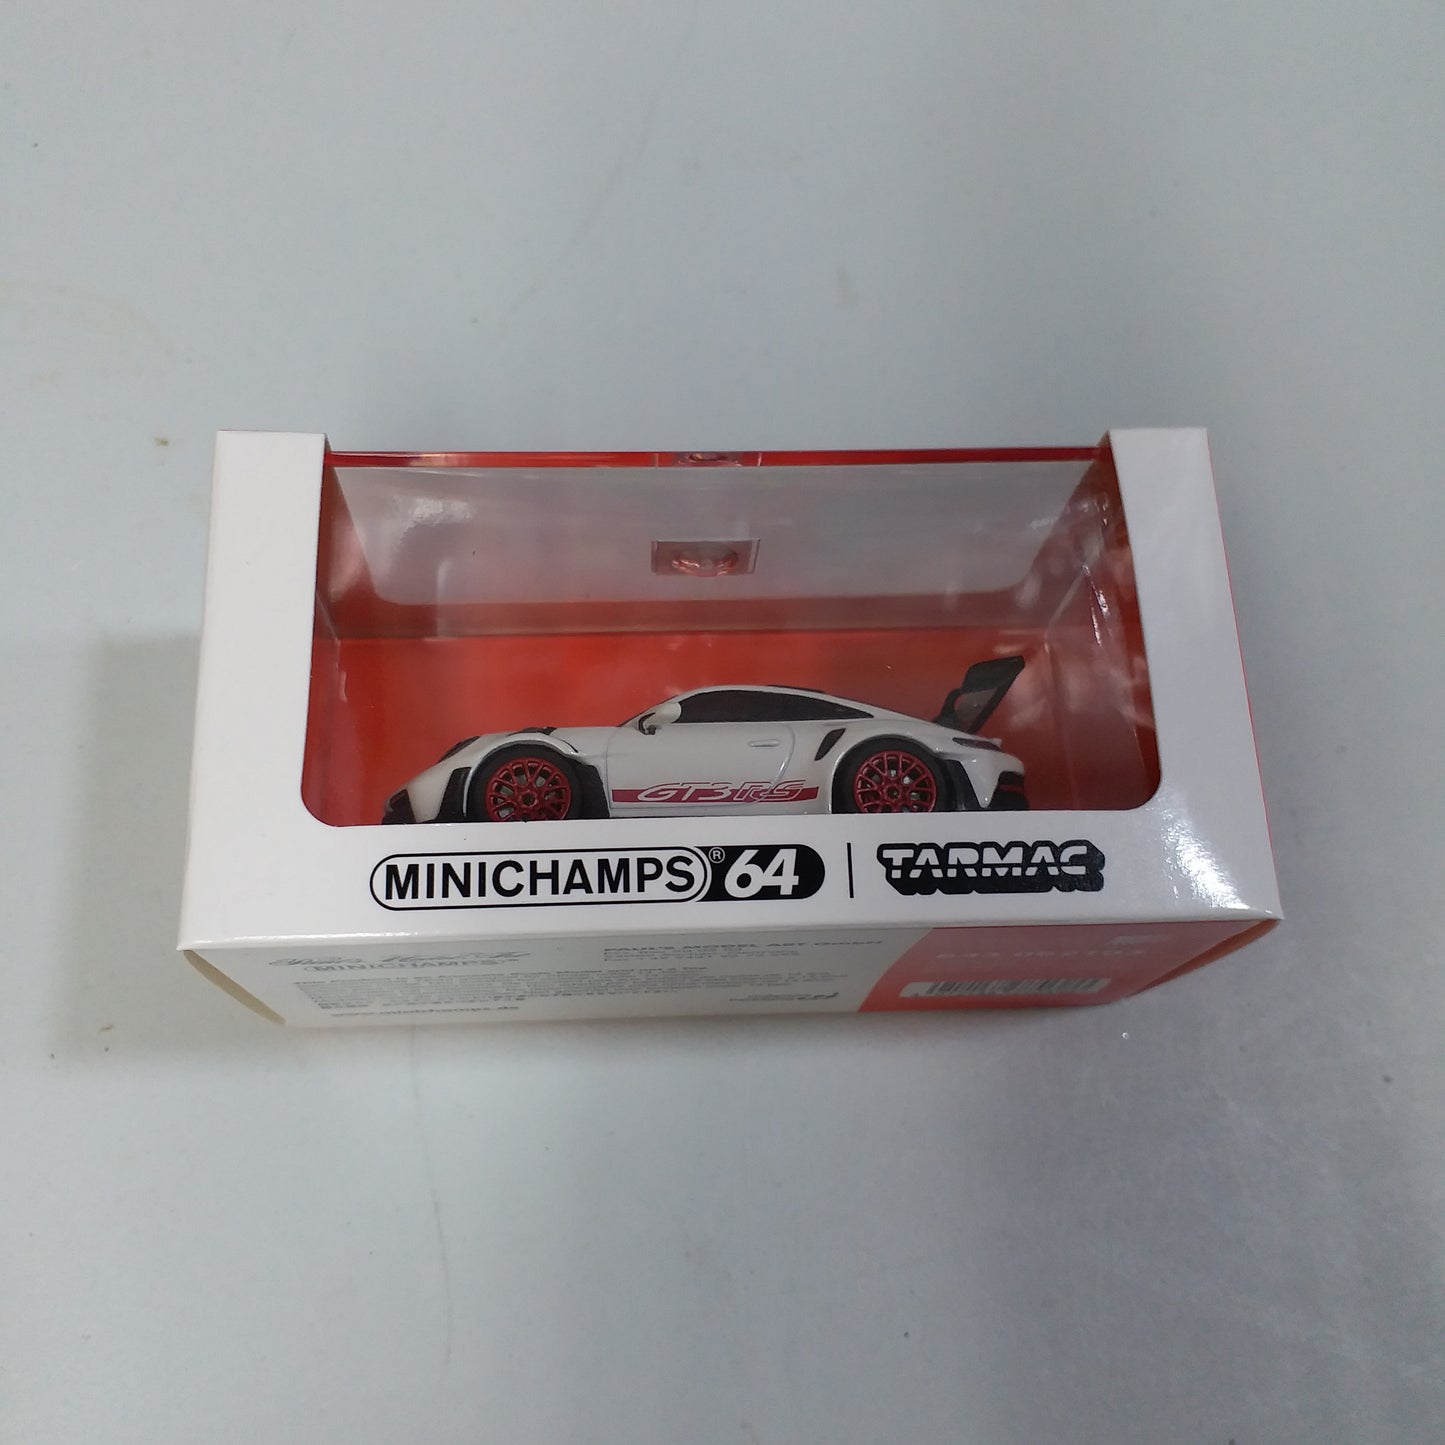 Tarmac Works x Minichamps 1/64 Porsche 911 (992) GT3 RS White / Red